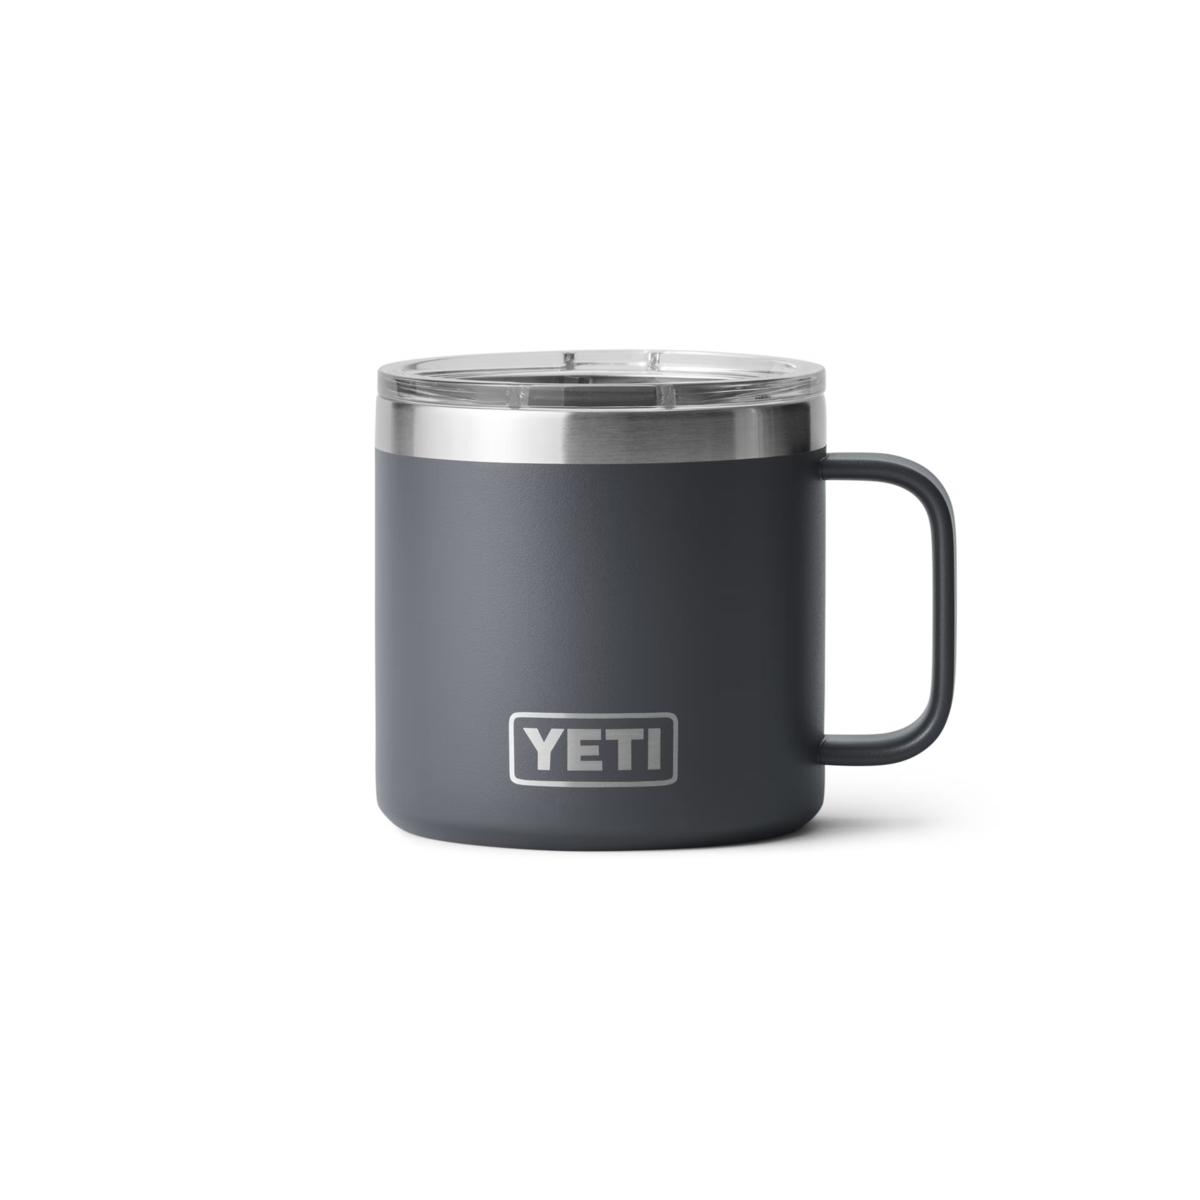 Yeti Rambler 14oz Mug in Charcoal